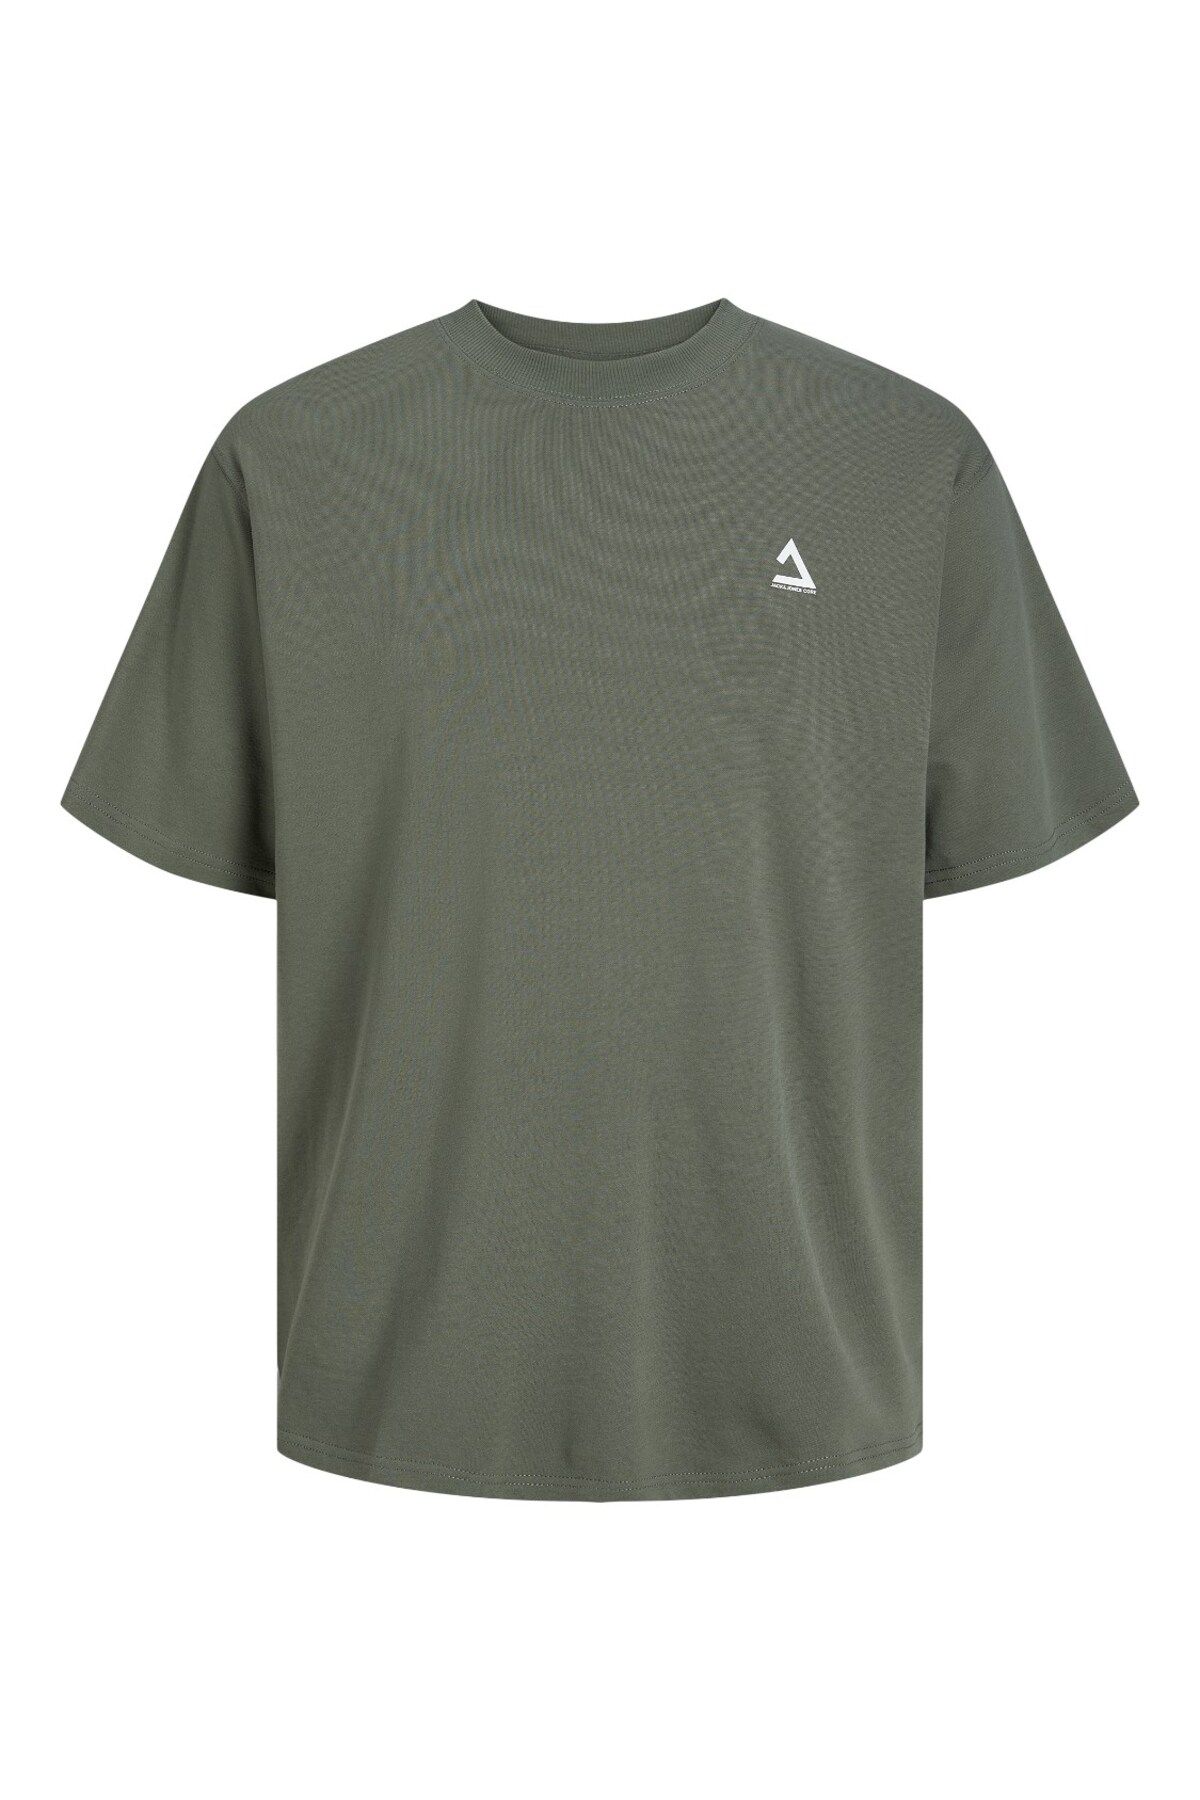 Jack & Jones تی شرت مردانه سبز سایز بزرگ جک اند جونز یقه کروی 12257373